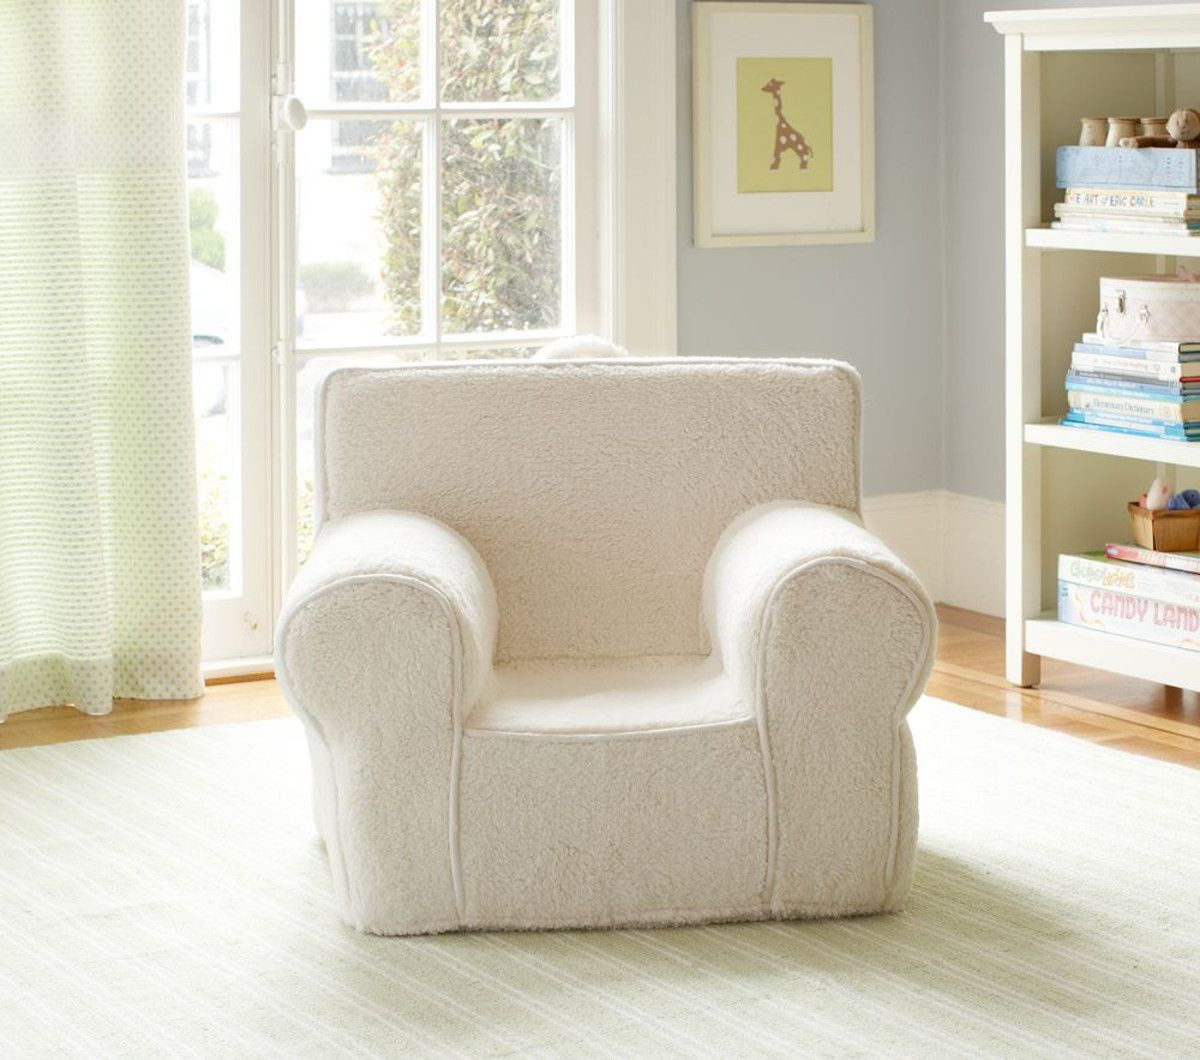 Pottery Barn Kids Chair Covers
 Cream Sherpa Anywhere Chair